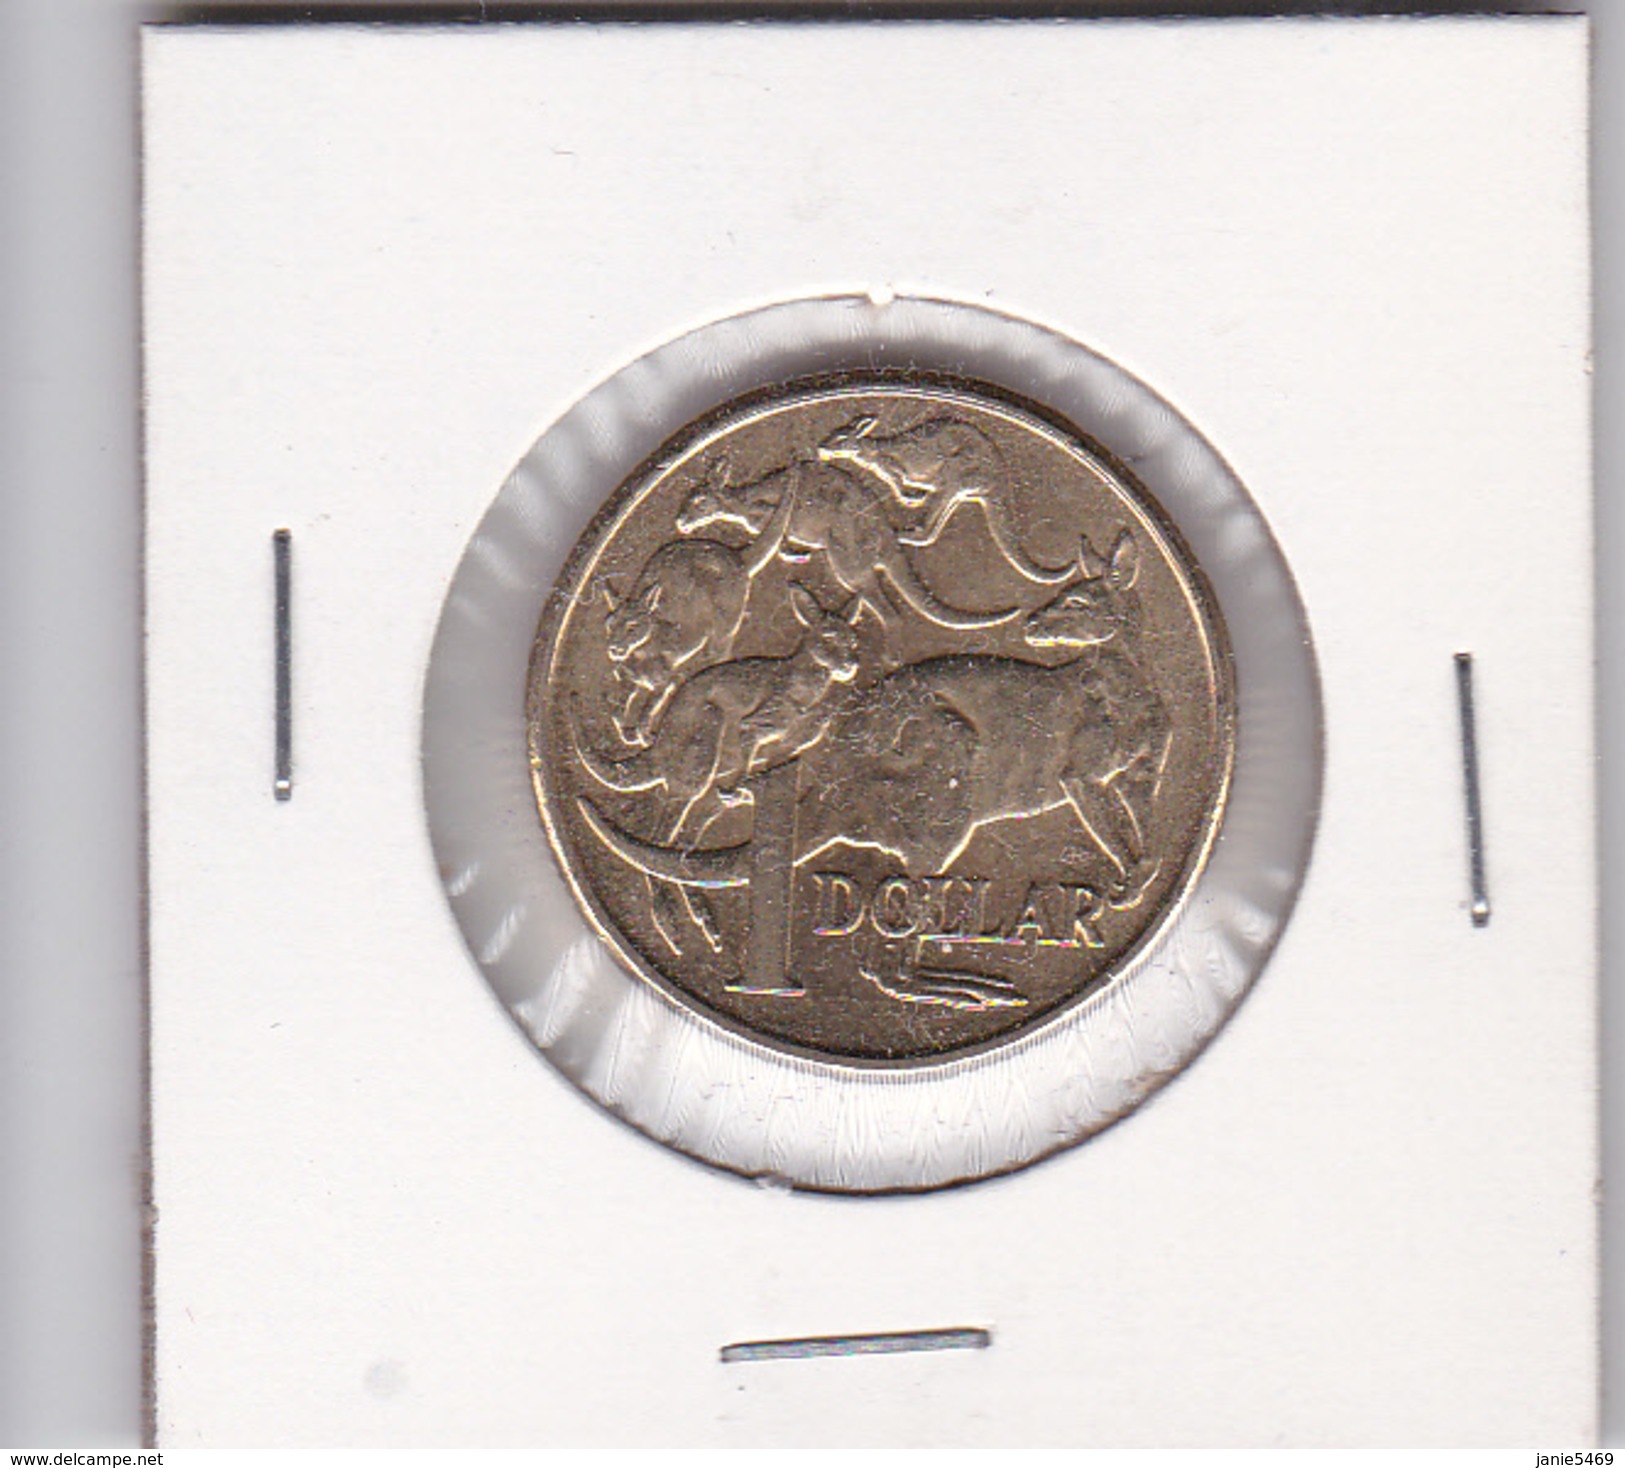 Australia 2016 $ 1.00 Coin - Dollar